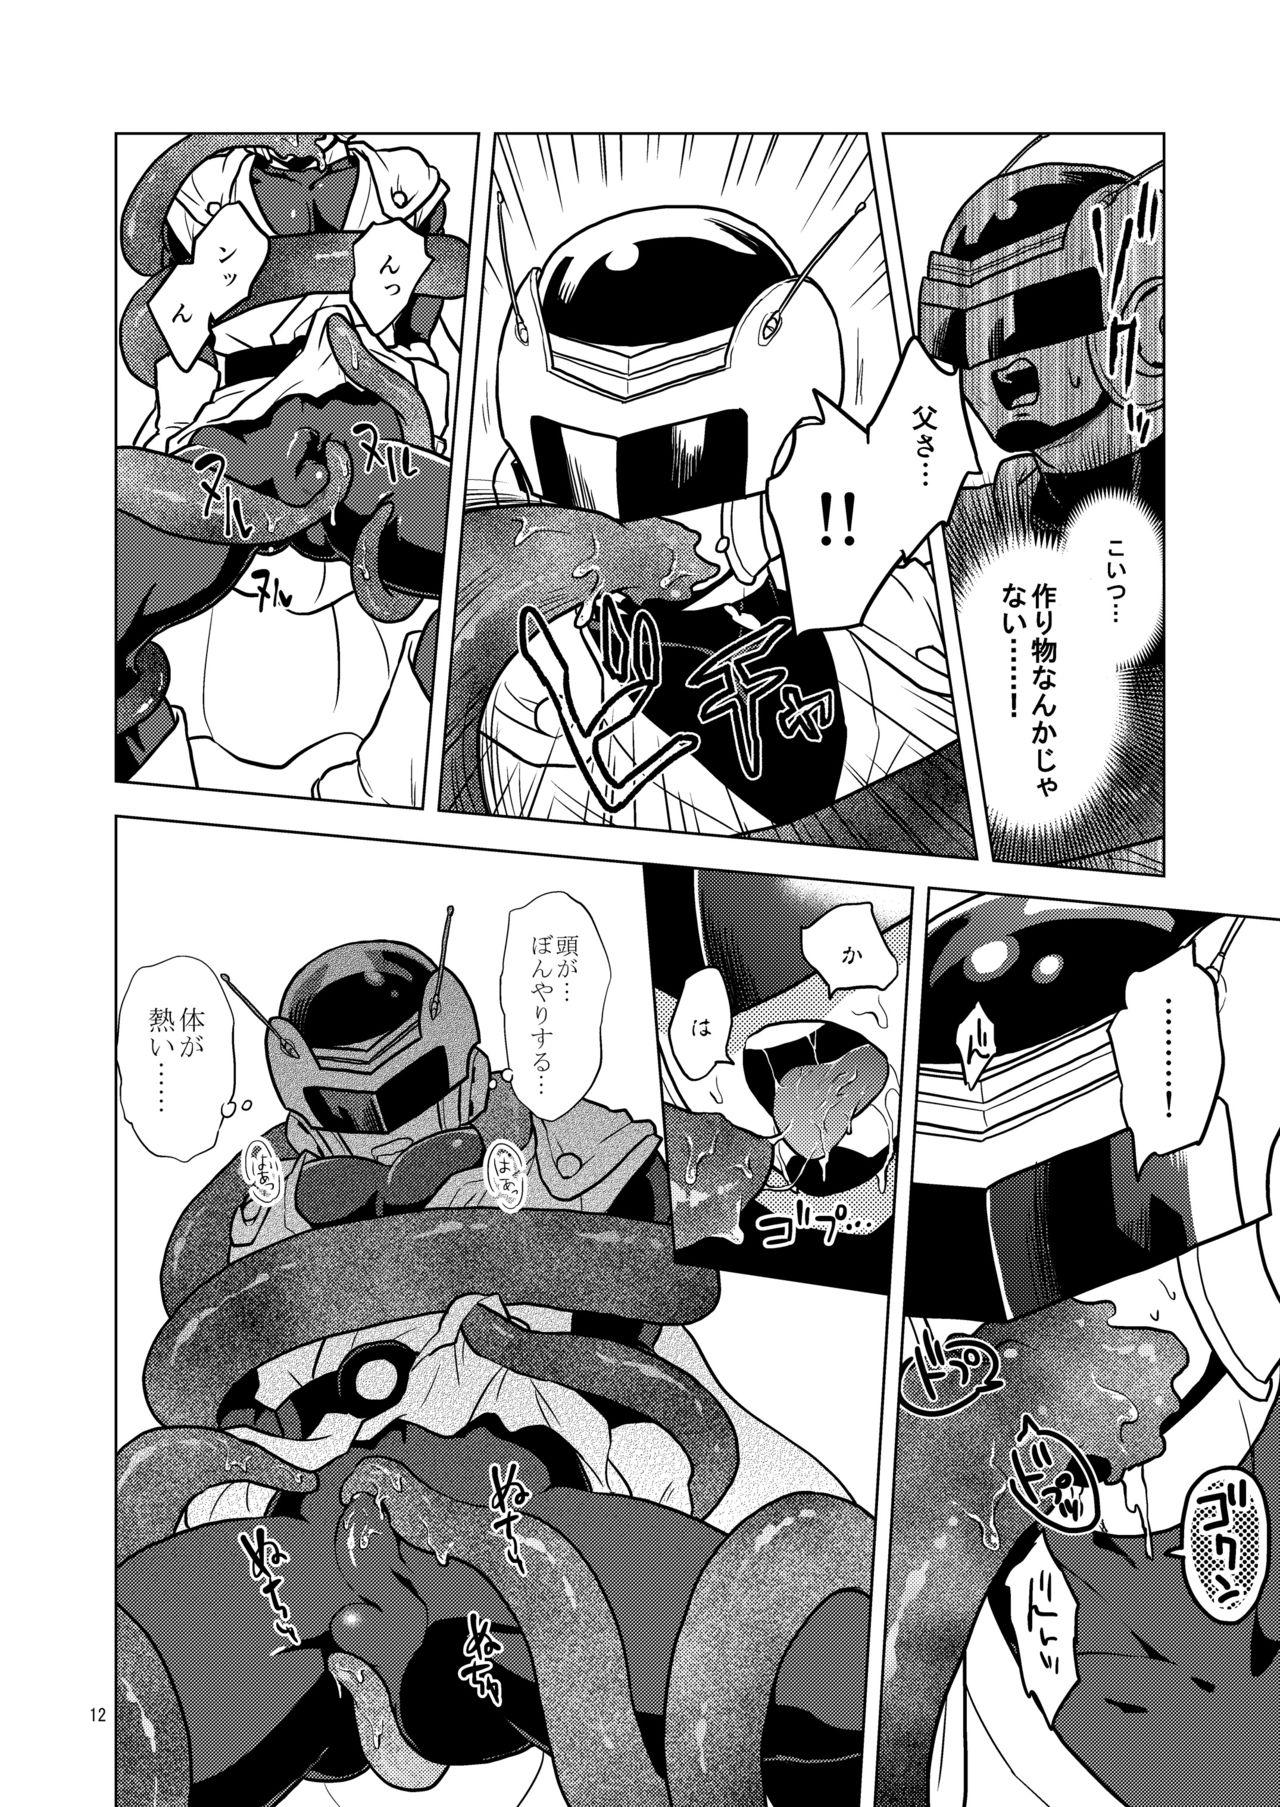 Riding Great Saiyaman vs Shokushu Kaijin - Dragon ball z Dragon ball super Hidden Camera - Page 12